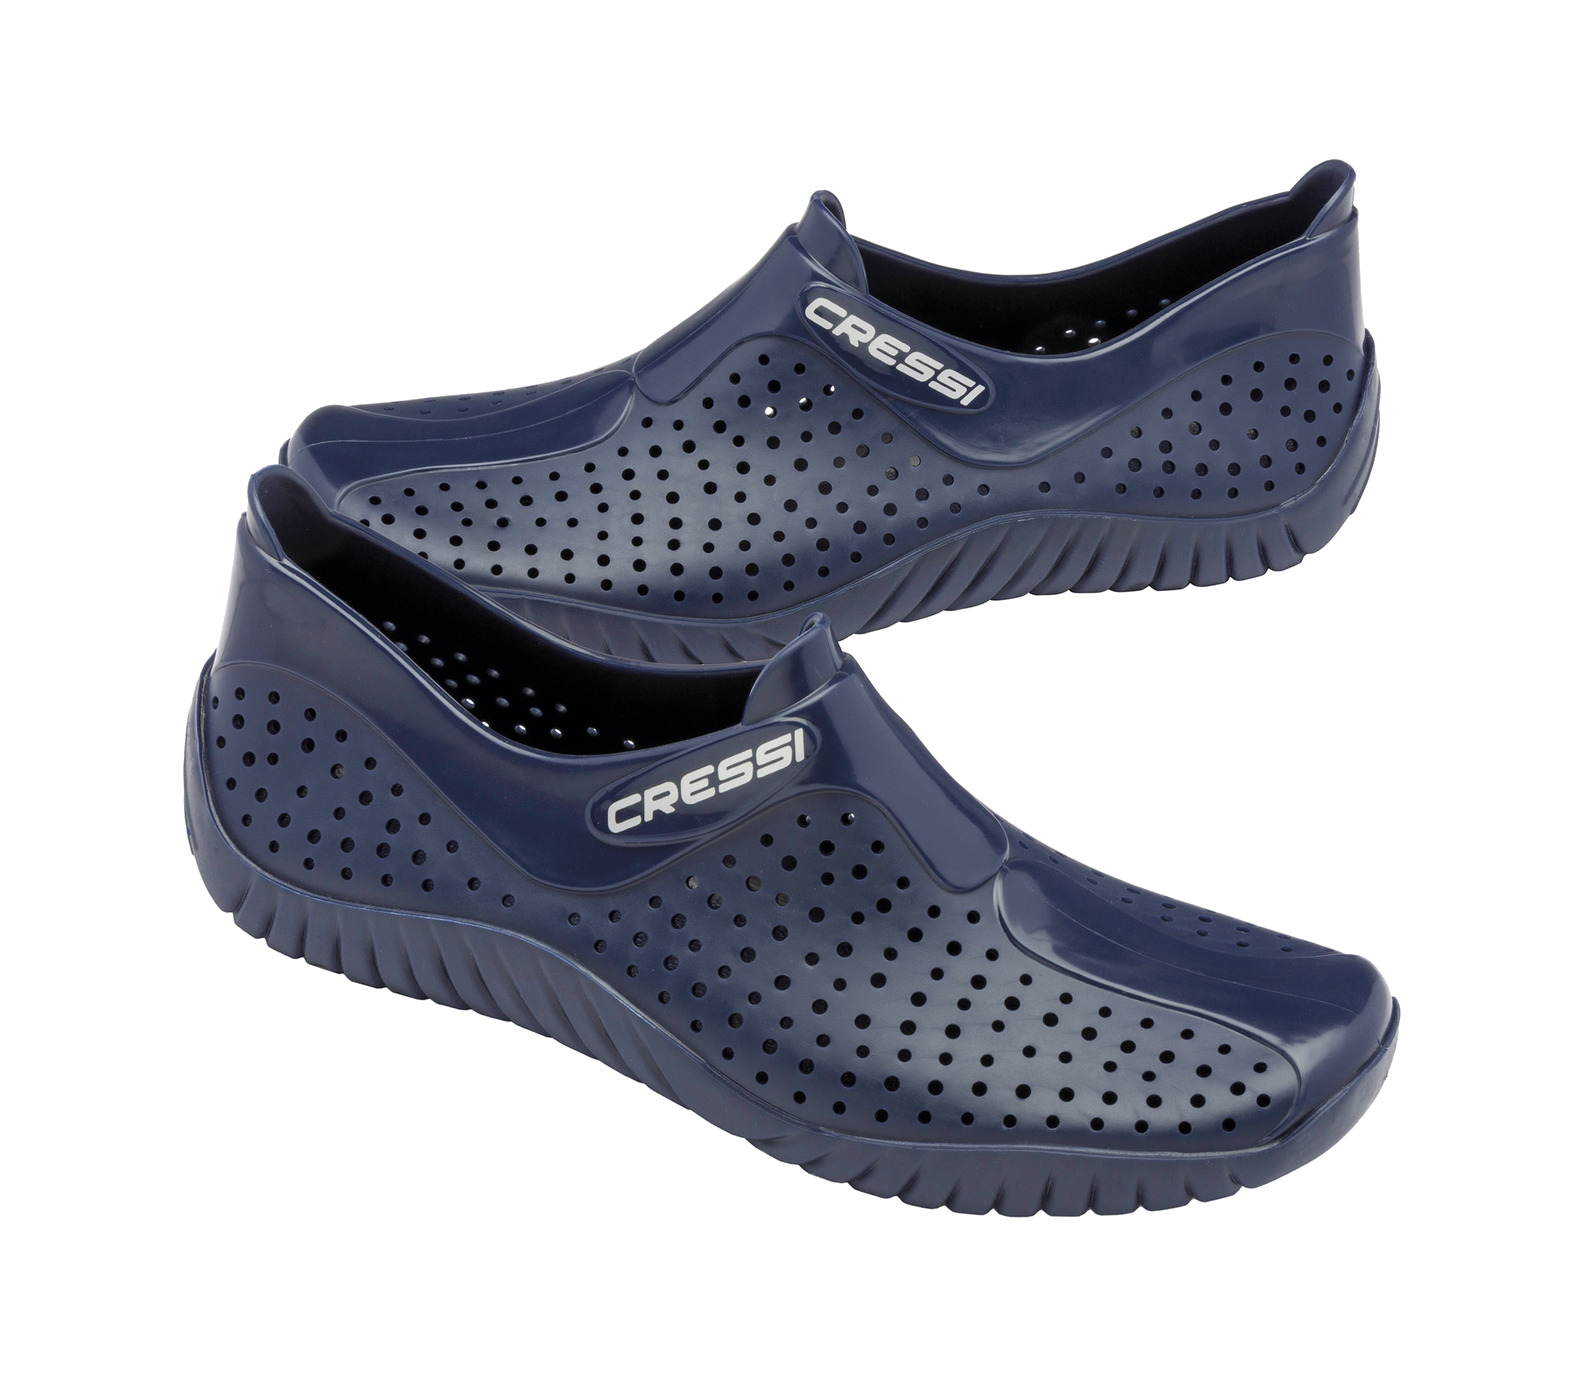 CRESSI Slip-resistant water shoes | eBay